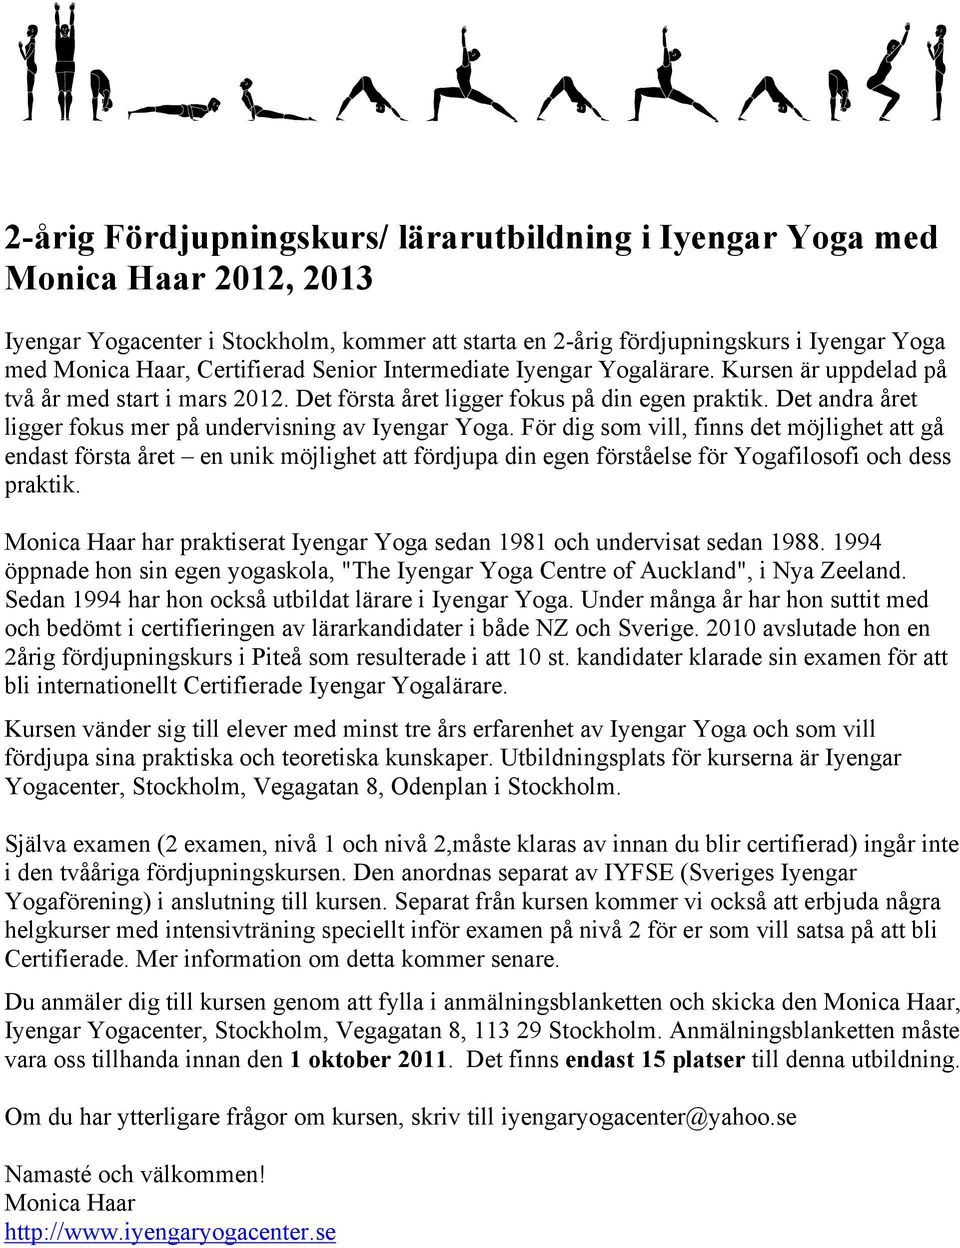 Det andra året ligger fokus mer på undervisning av Iyengar Yoga.